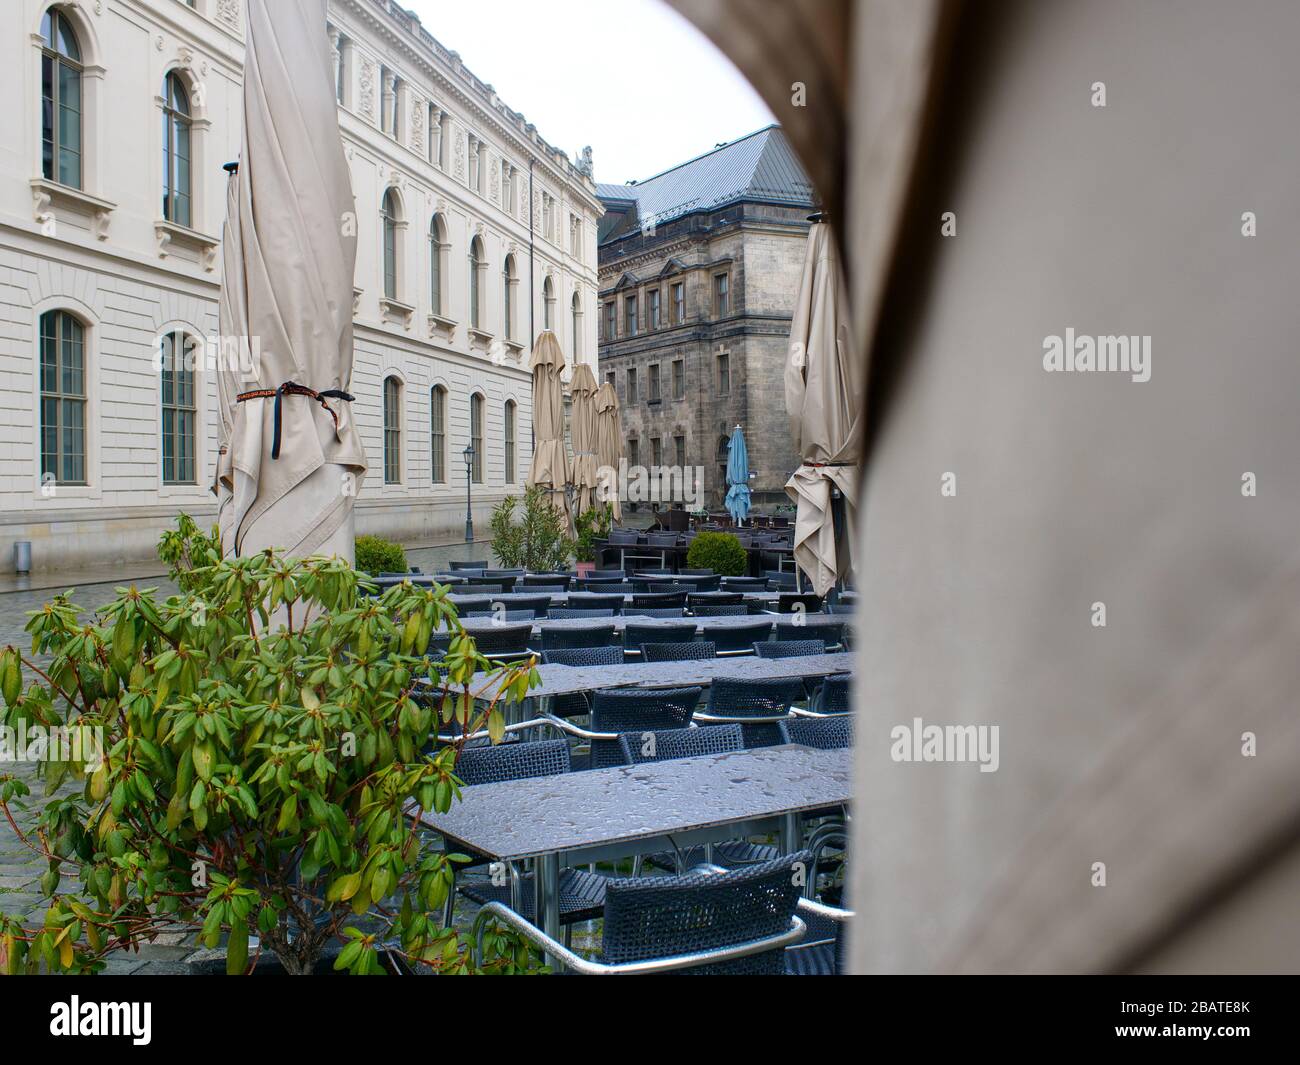 Leere Tische und Stühle a Dresda wegen Coronavirus Lockdown COVID-19 leeres Ristorante Gastronomia Foto Stock